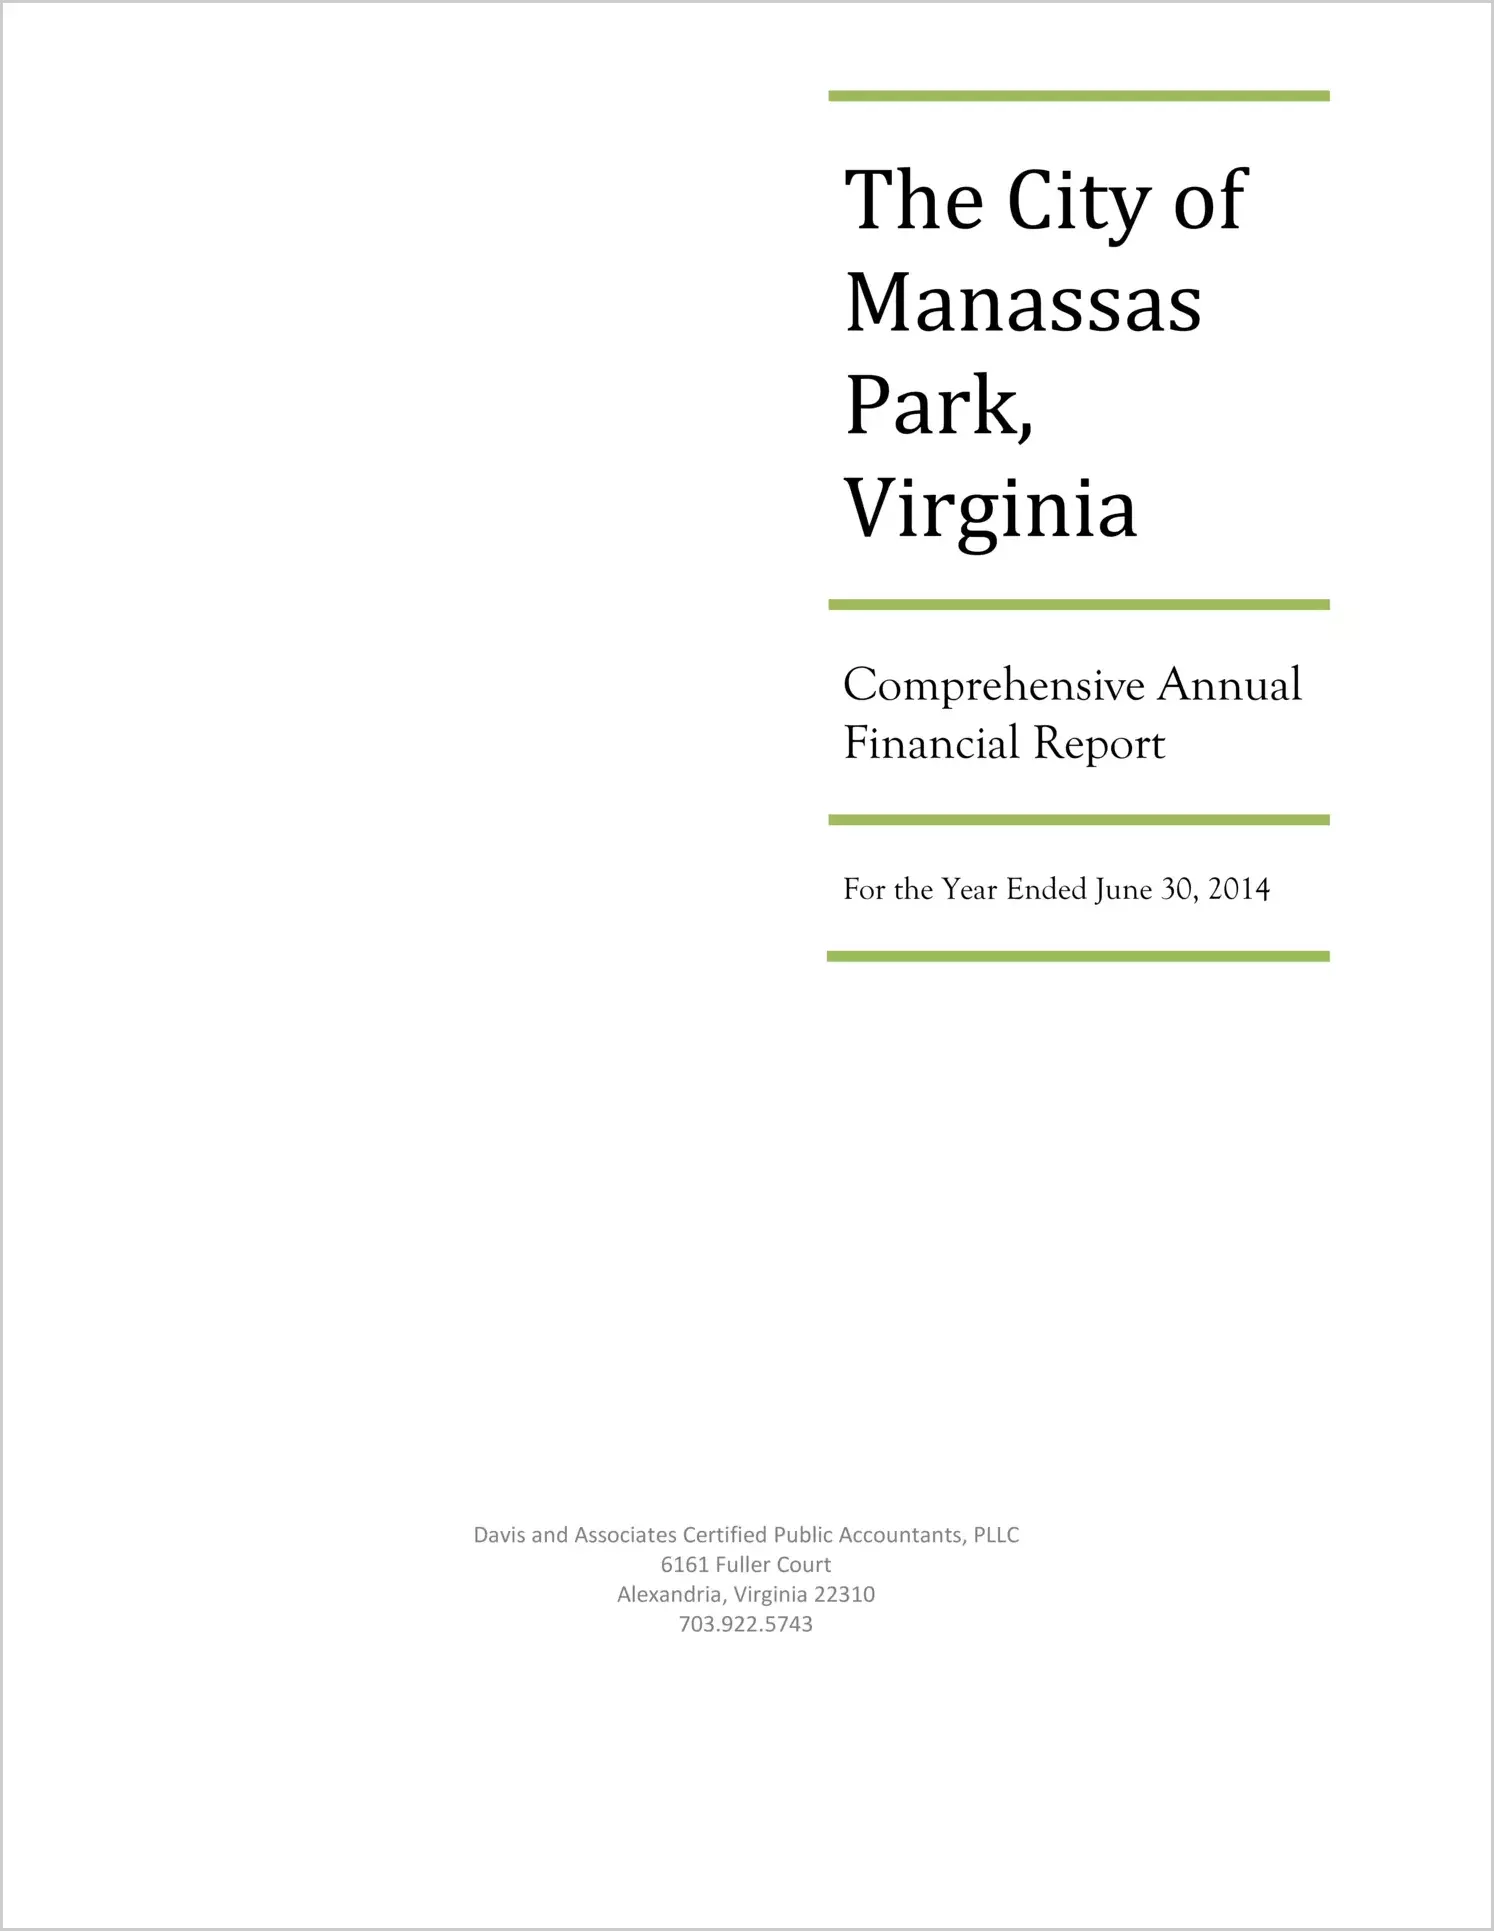 2014 Annual Financial Report for City of Manassas Park